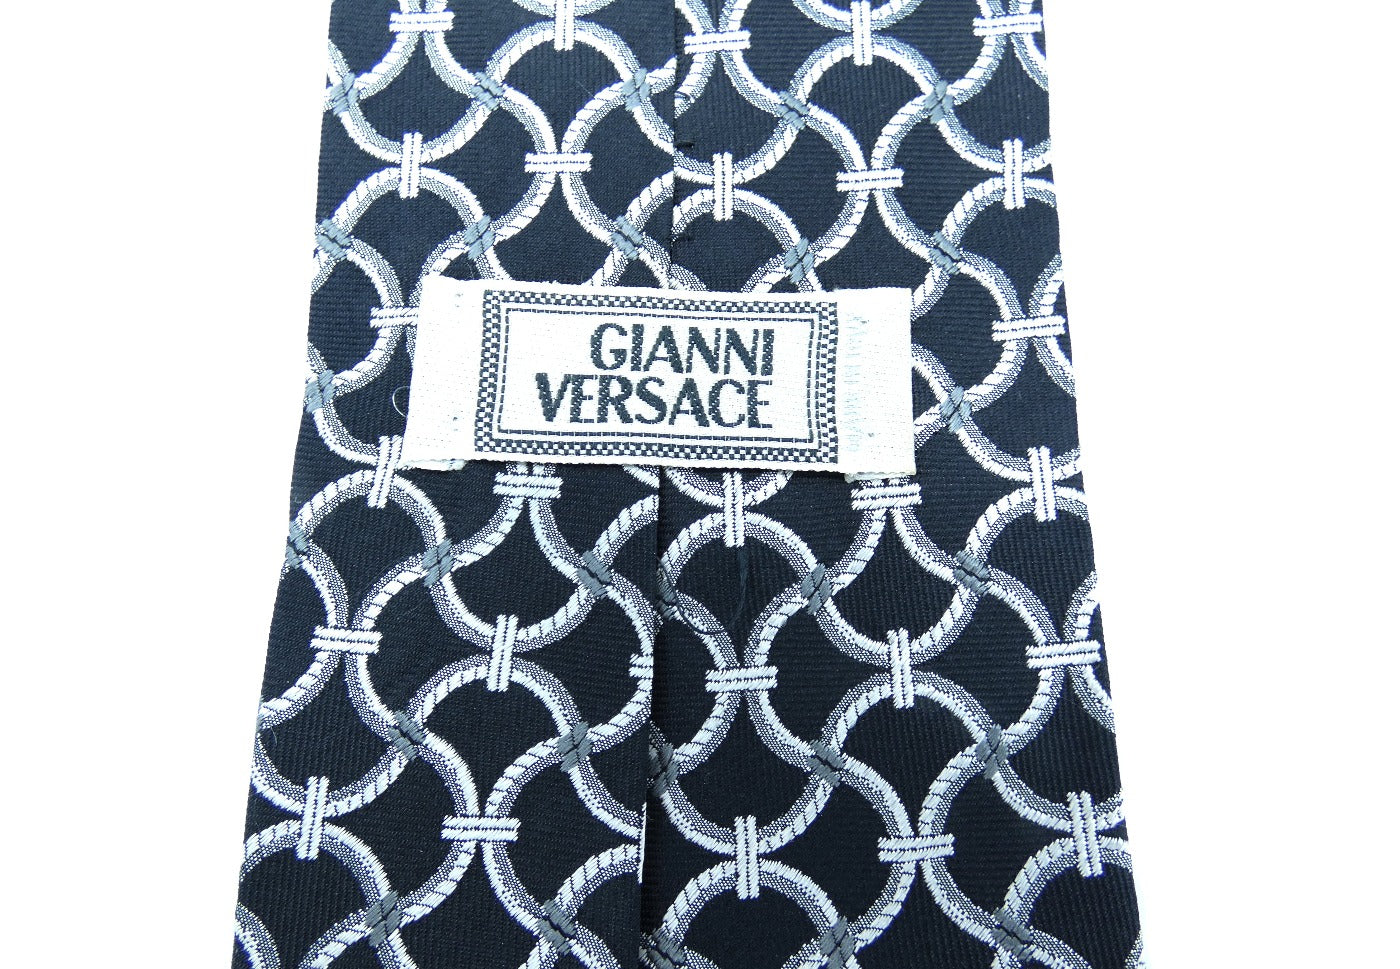 Gianni Versace Graphic Black and White Silk Tie Ties Gianni Versace